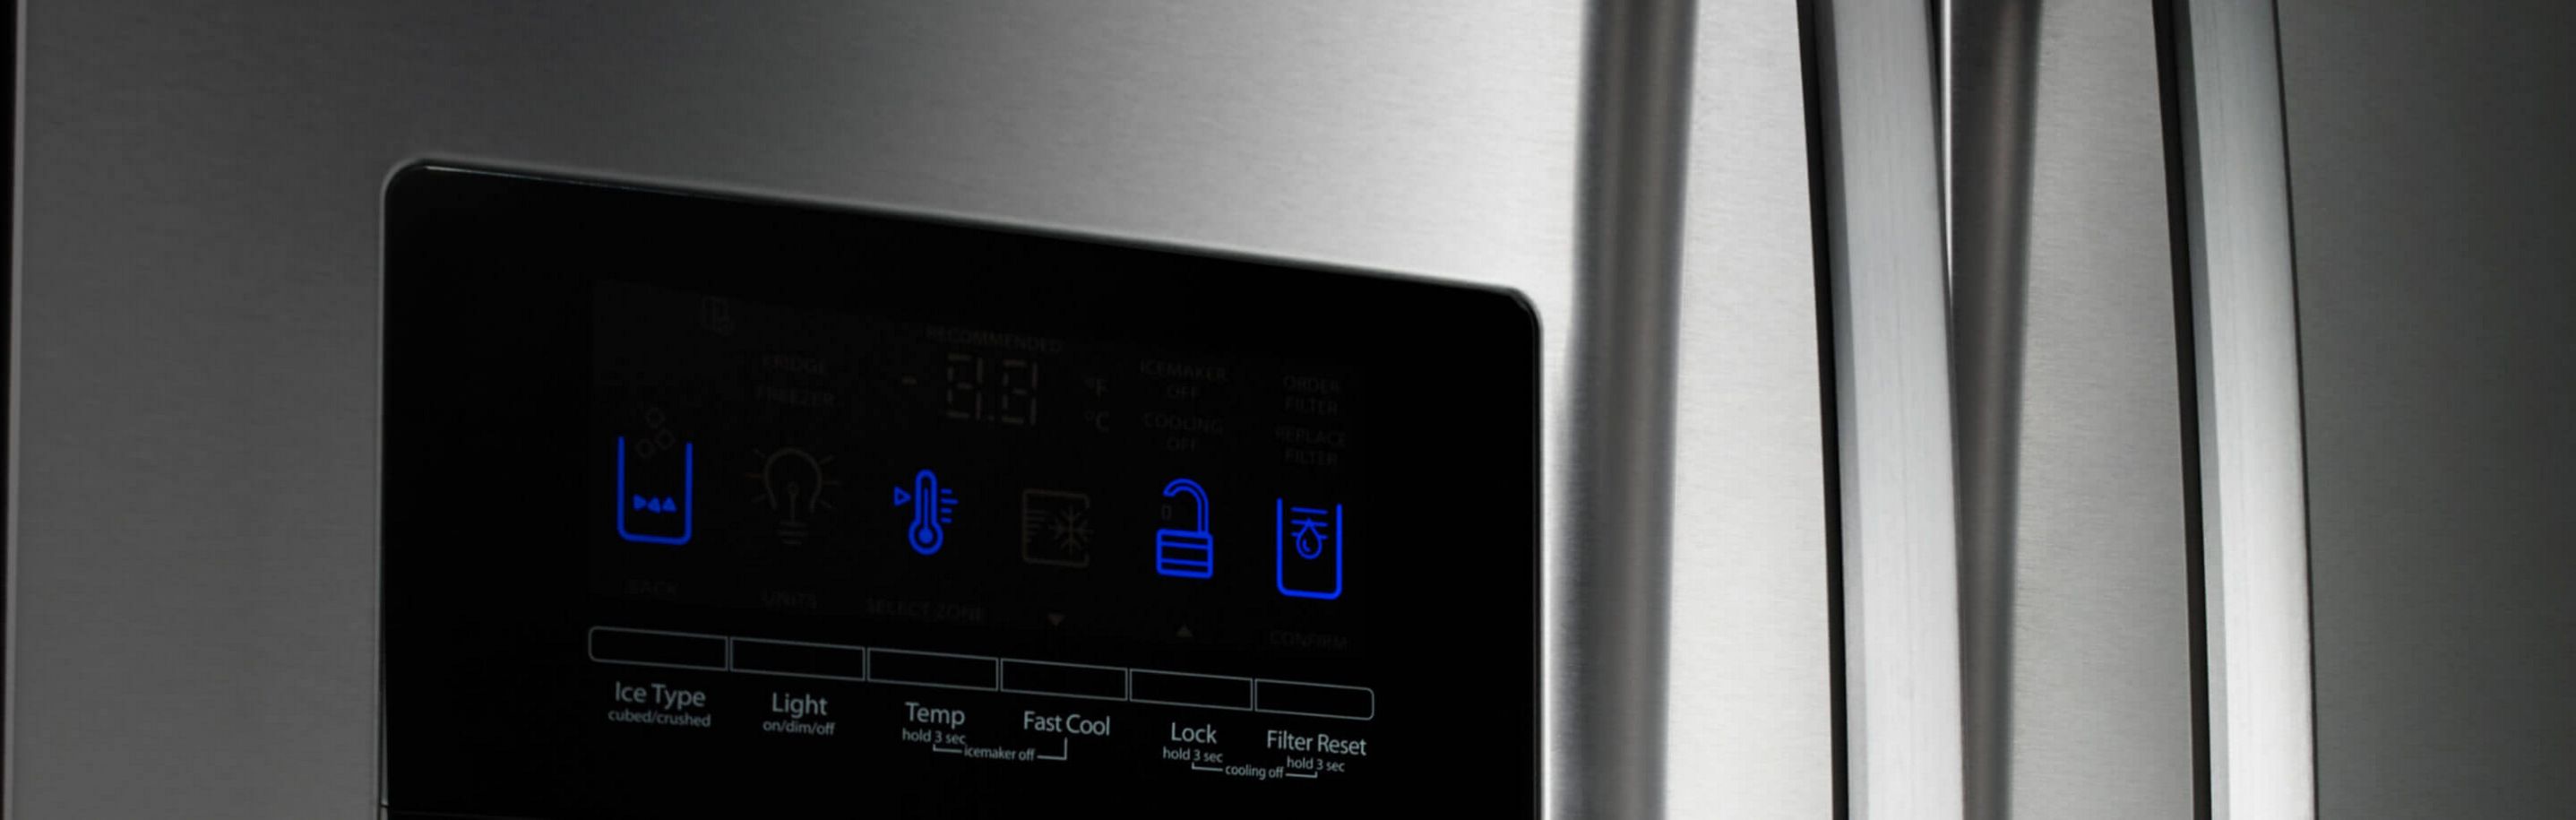 Refrigerator water dispenser panel